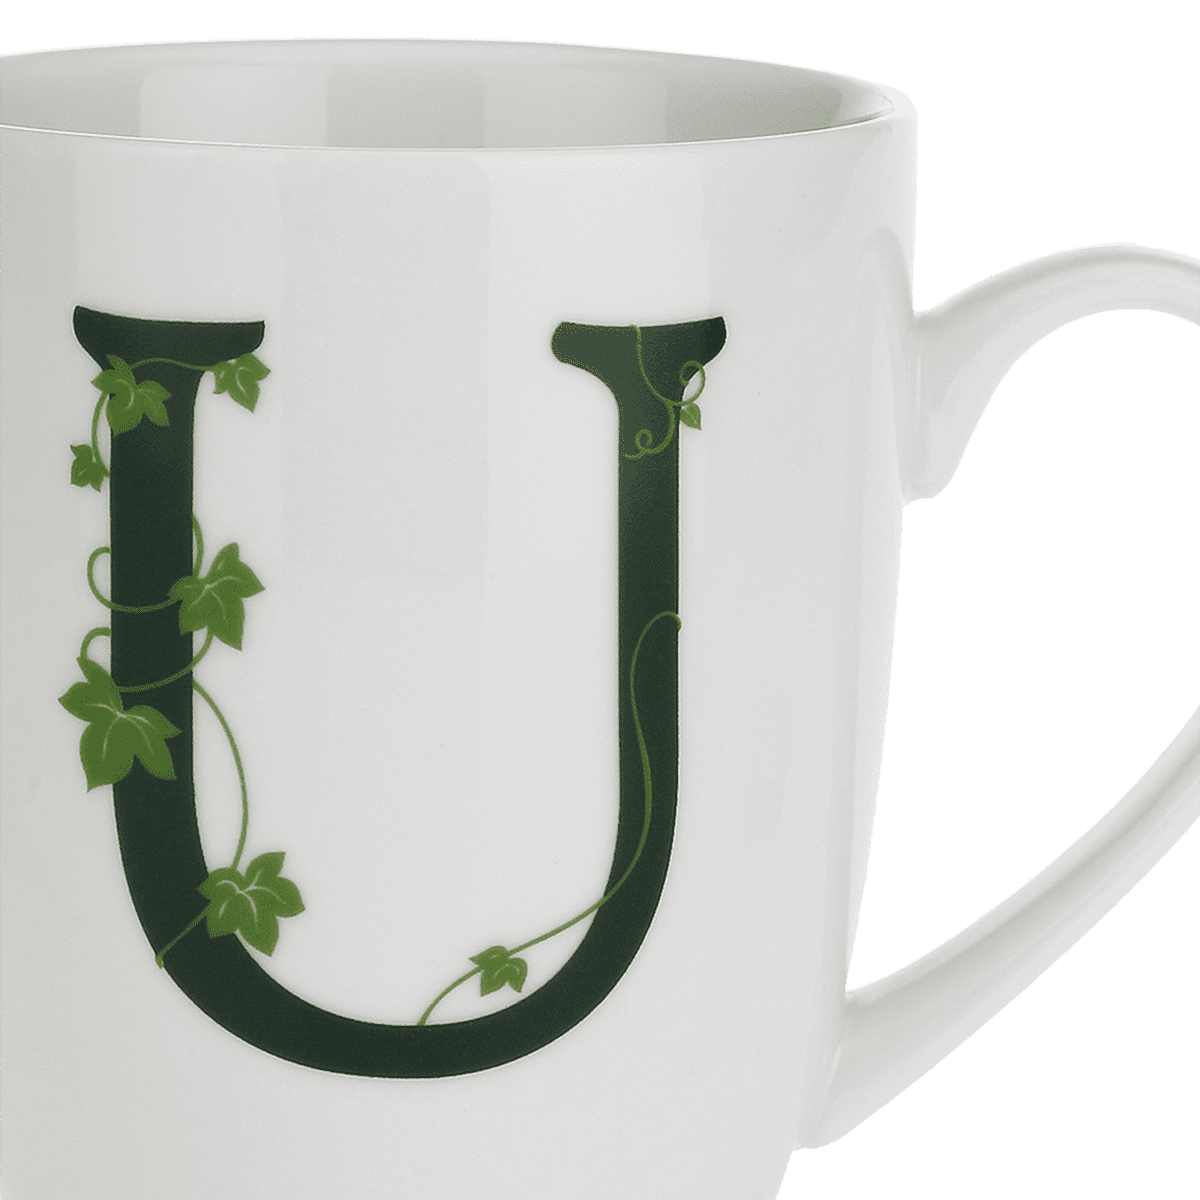 Atupertu Coffee Mug